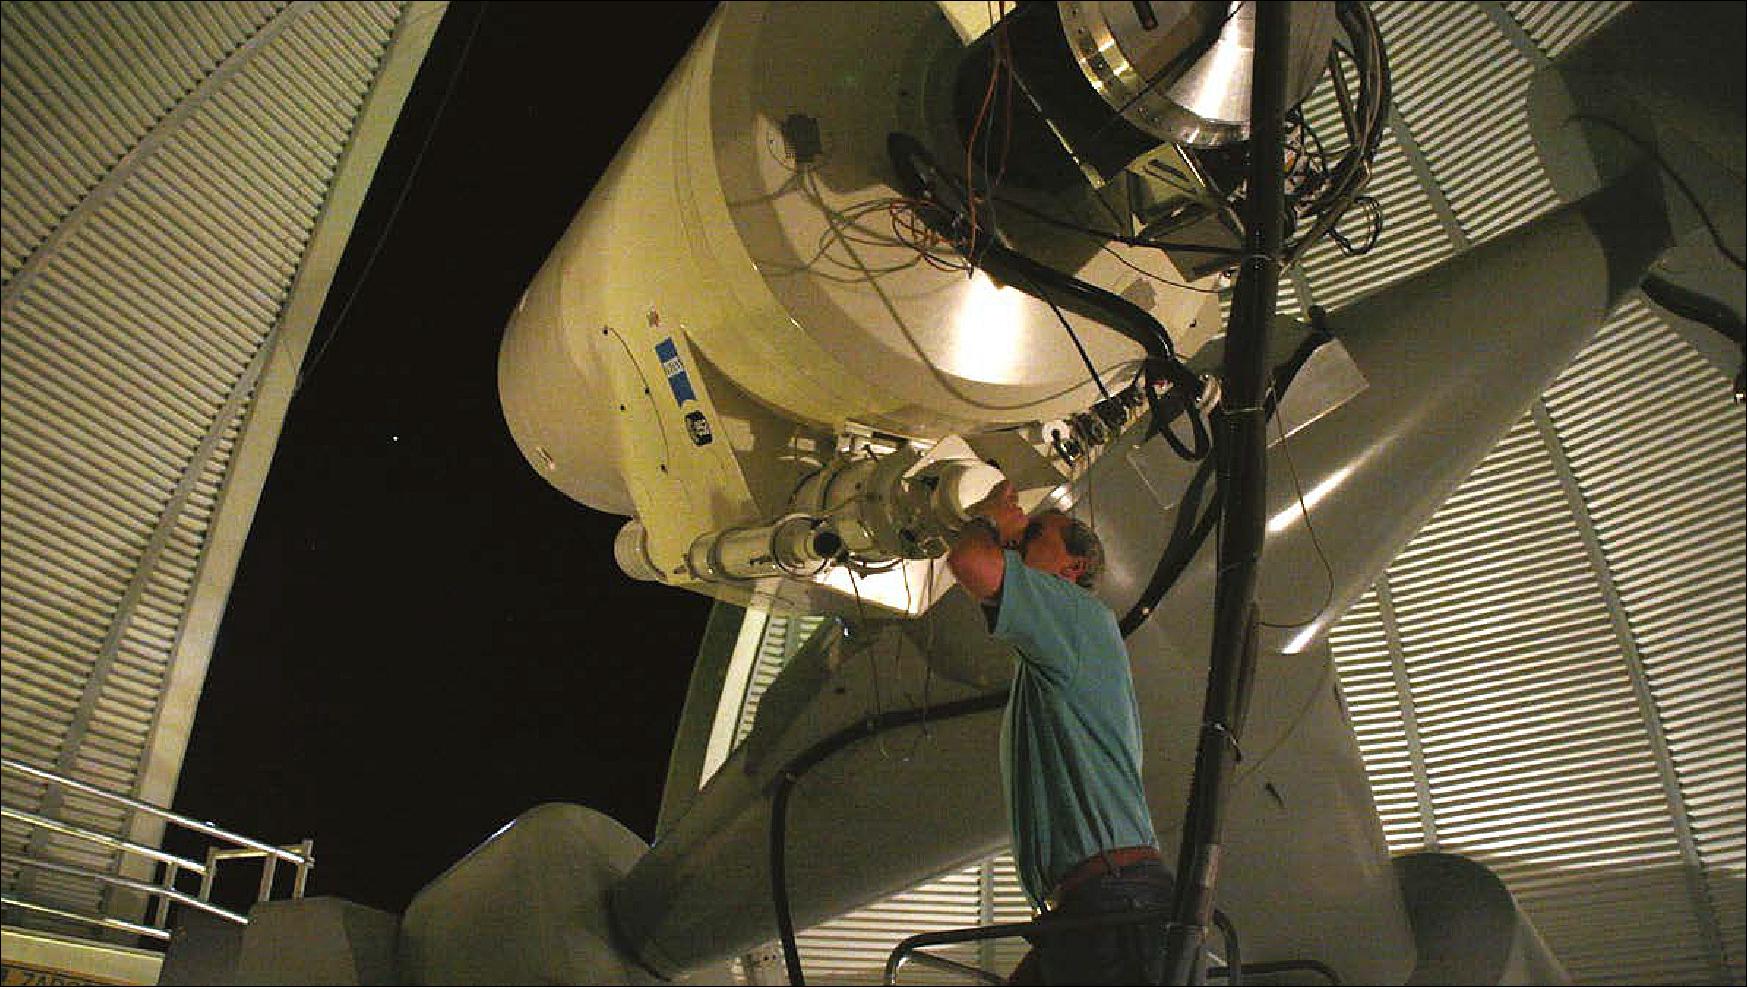 Figure 43: ESA’s 1 m diameter Zeiss space debris telescope at the Optical Ground Station on Tenerife (image credit: ESA)